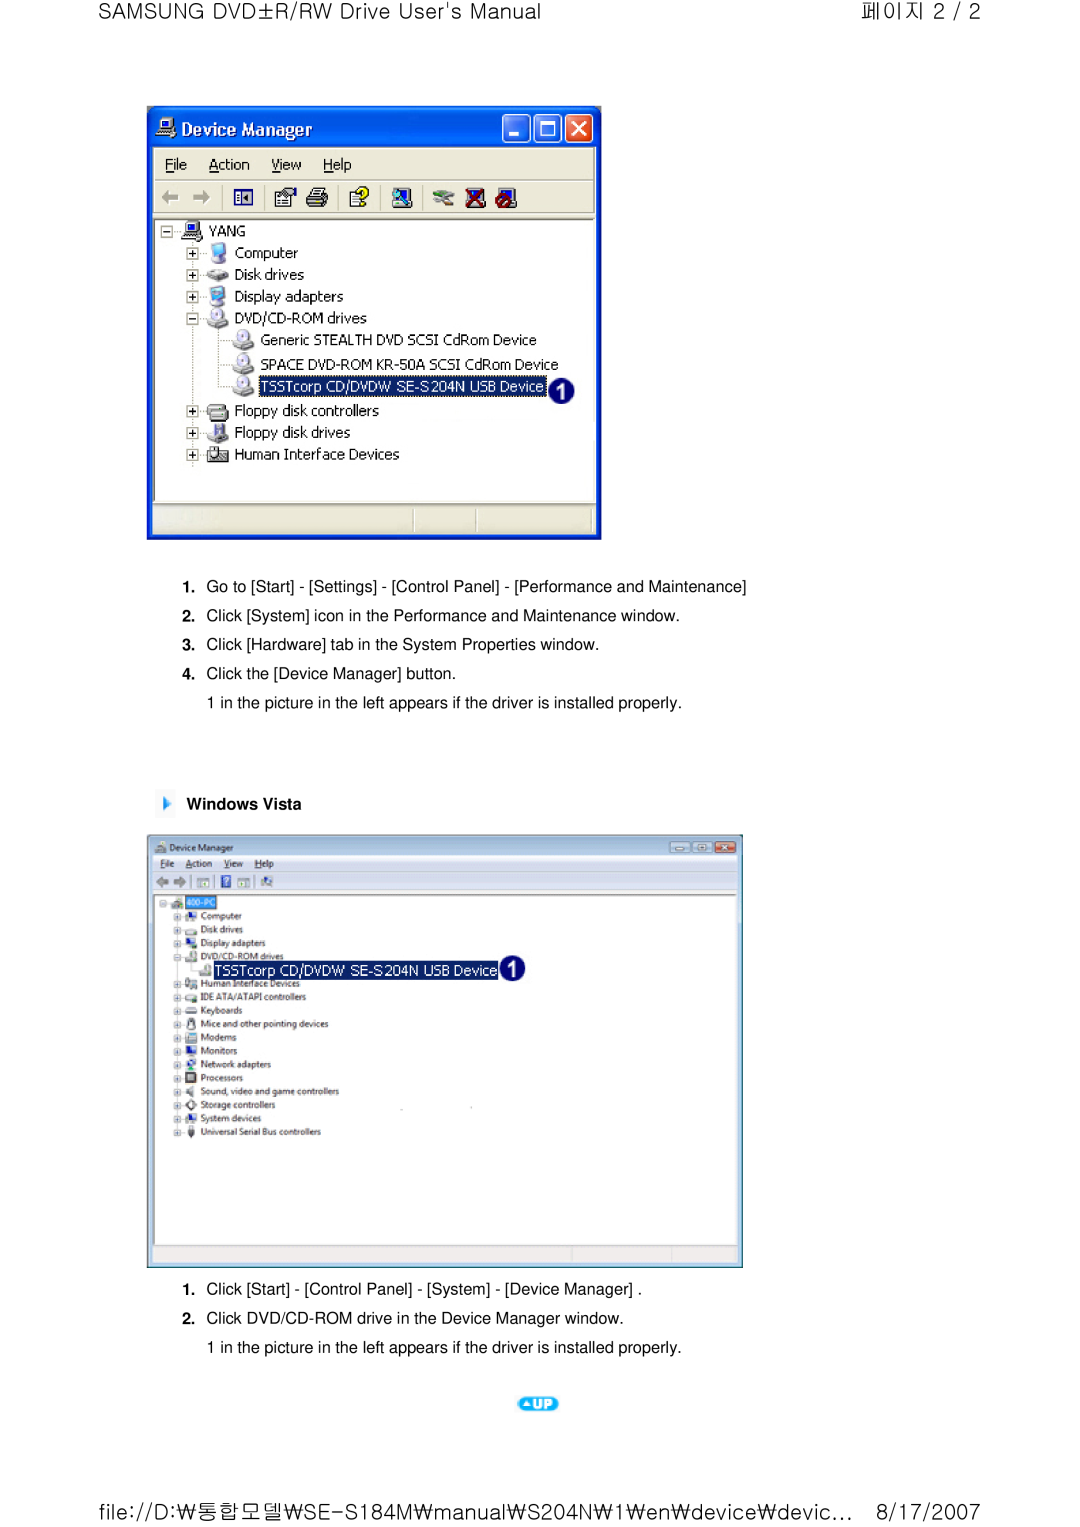 Samsung SE-S204N user manual SAMSUNG DVD±R/RW Drive Users Manual, 페이지 2, Windows Vista 